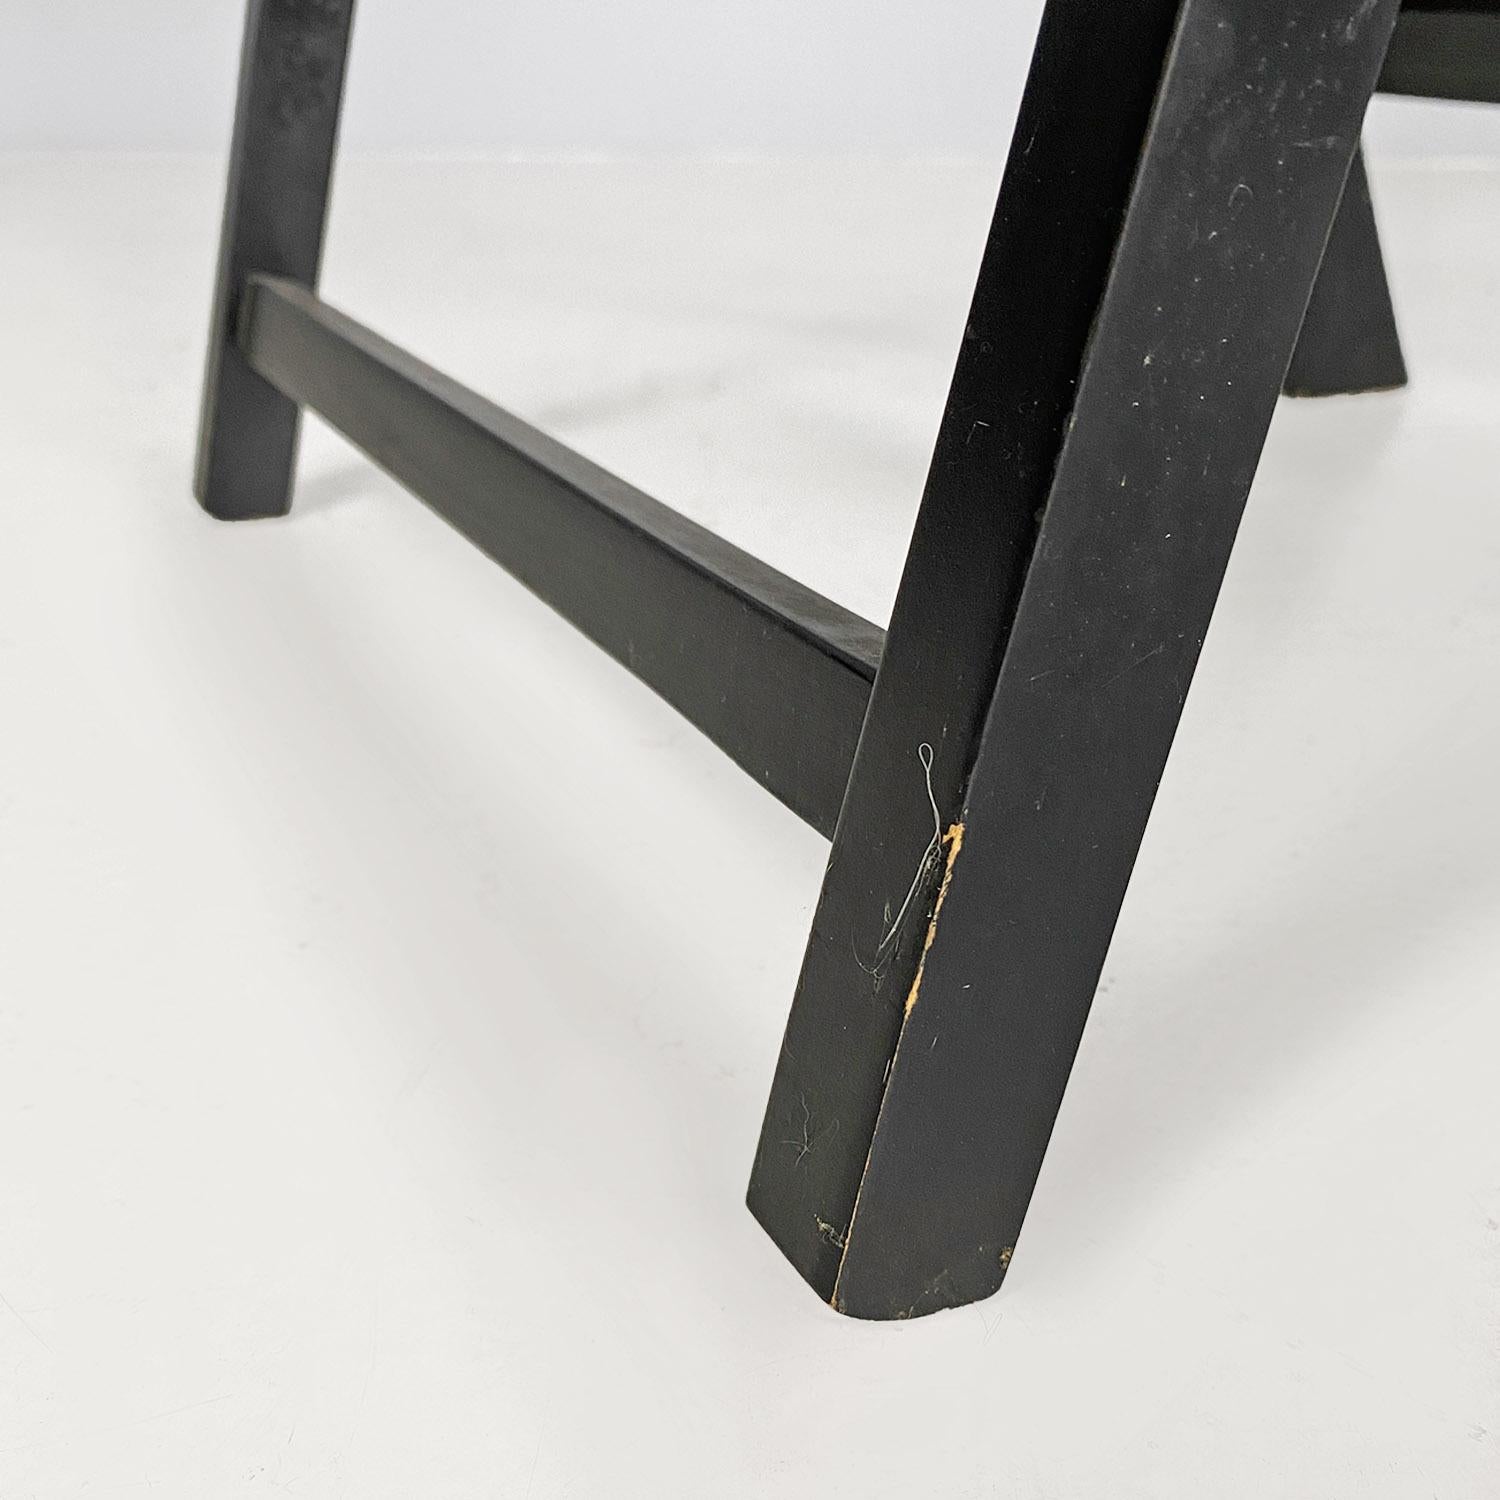 Italian folding chair, black wood, Achille and Pier Giacomo Castiglioni 1960s For Sale 7